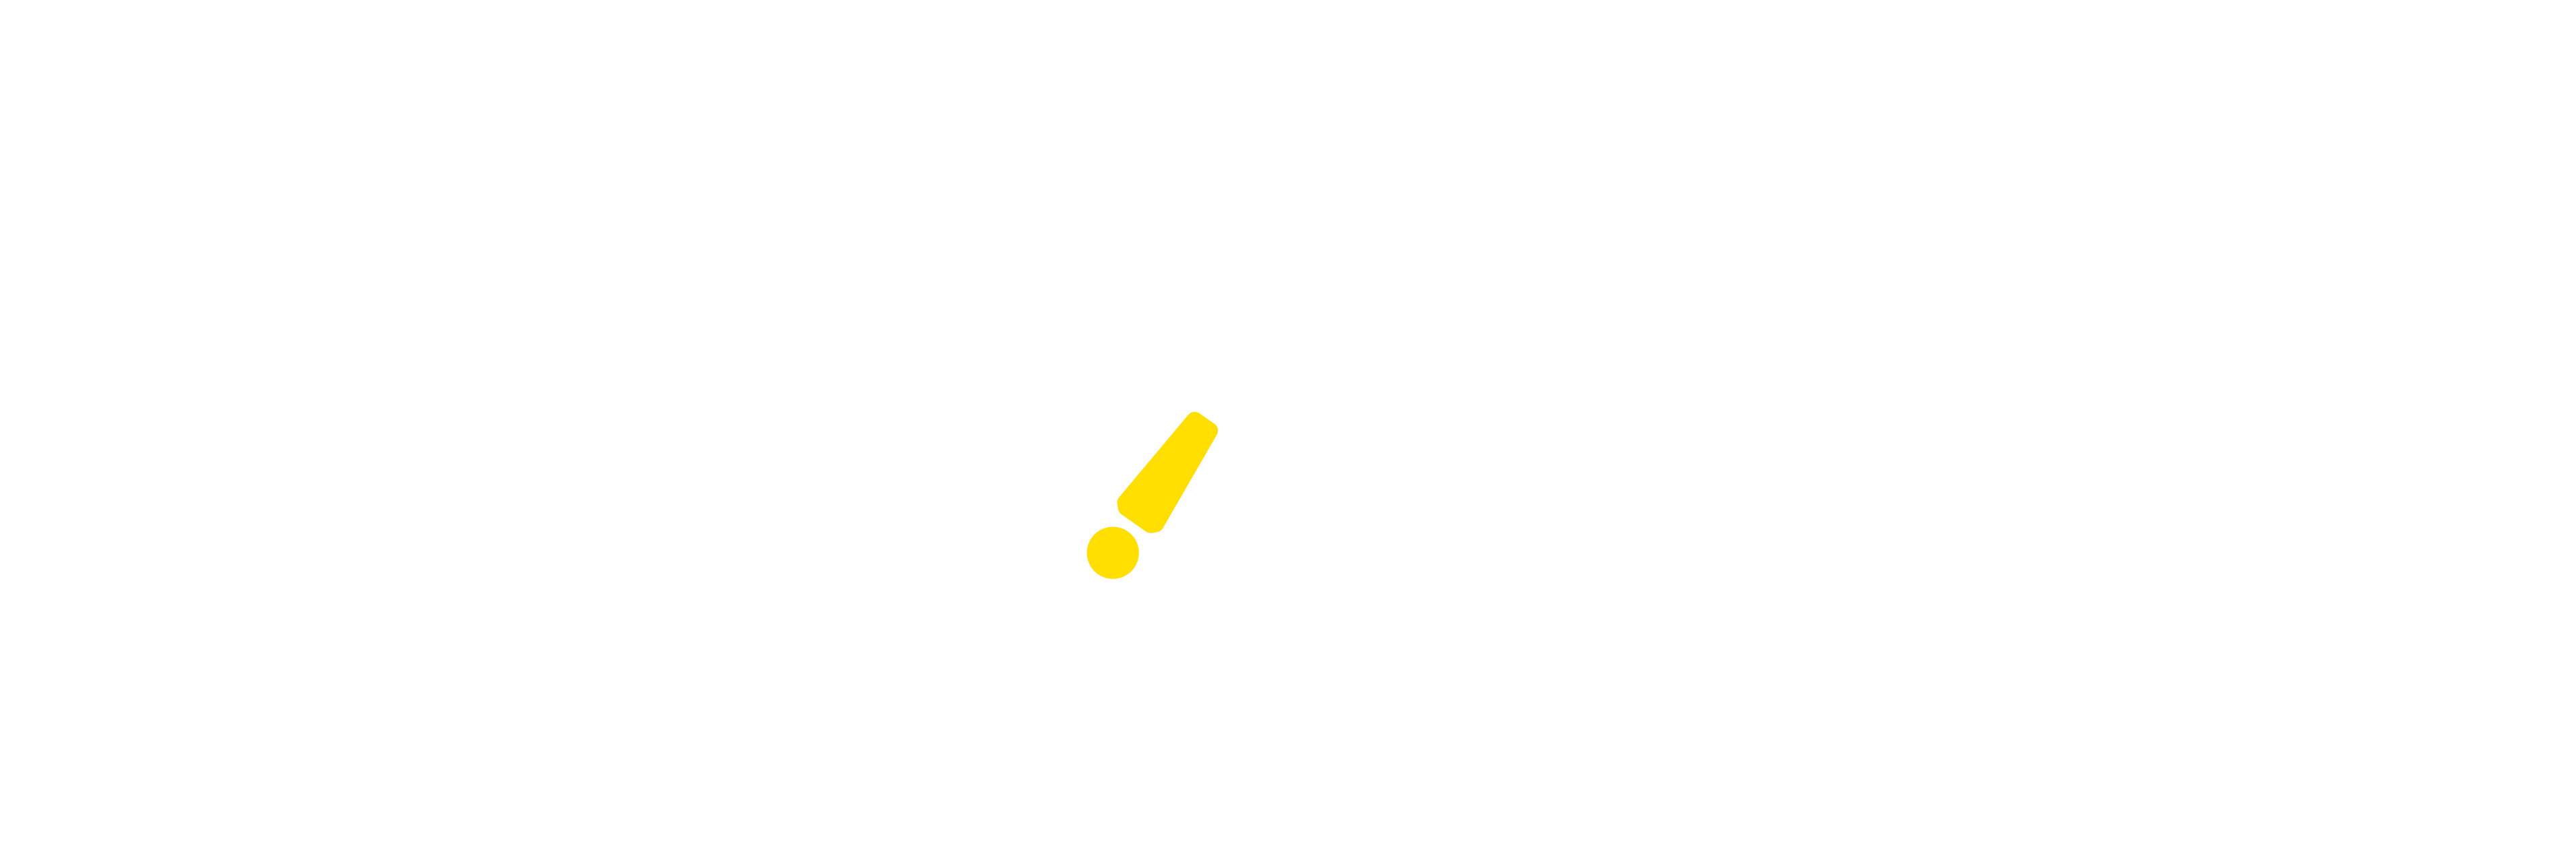 Pharmacy Podcast Network logo